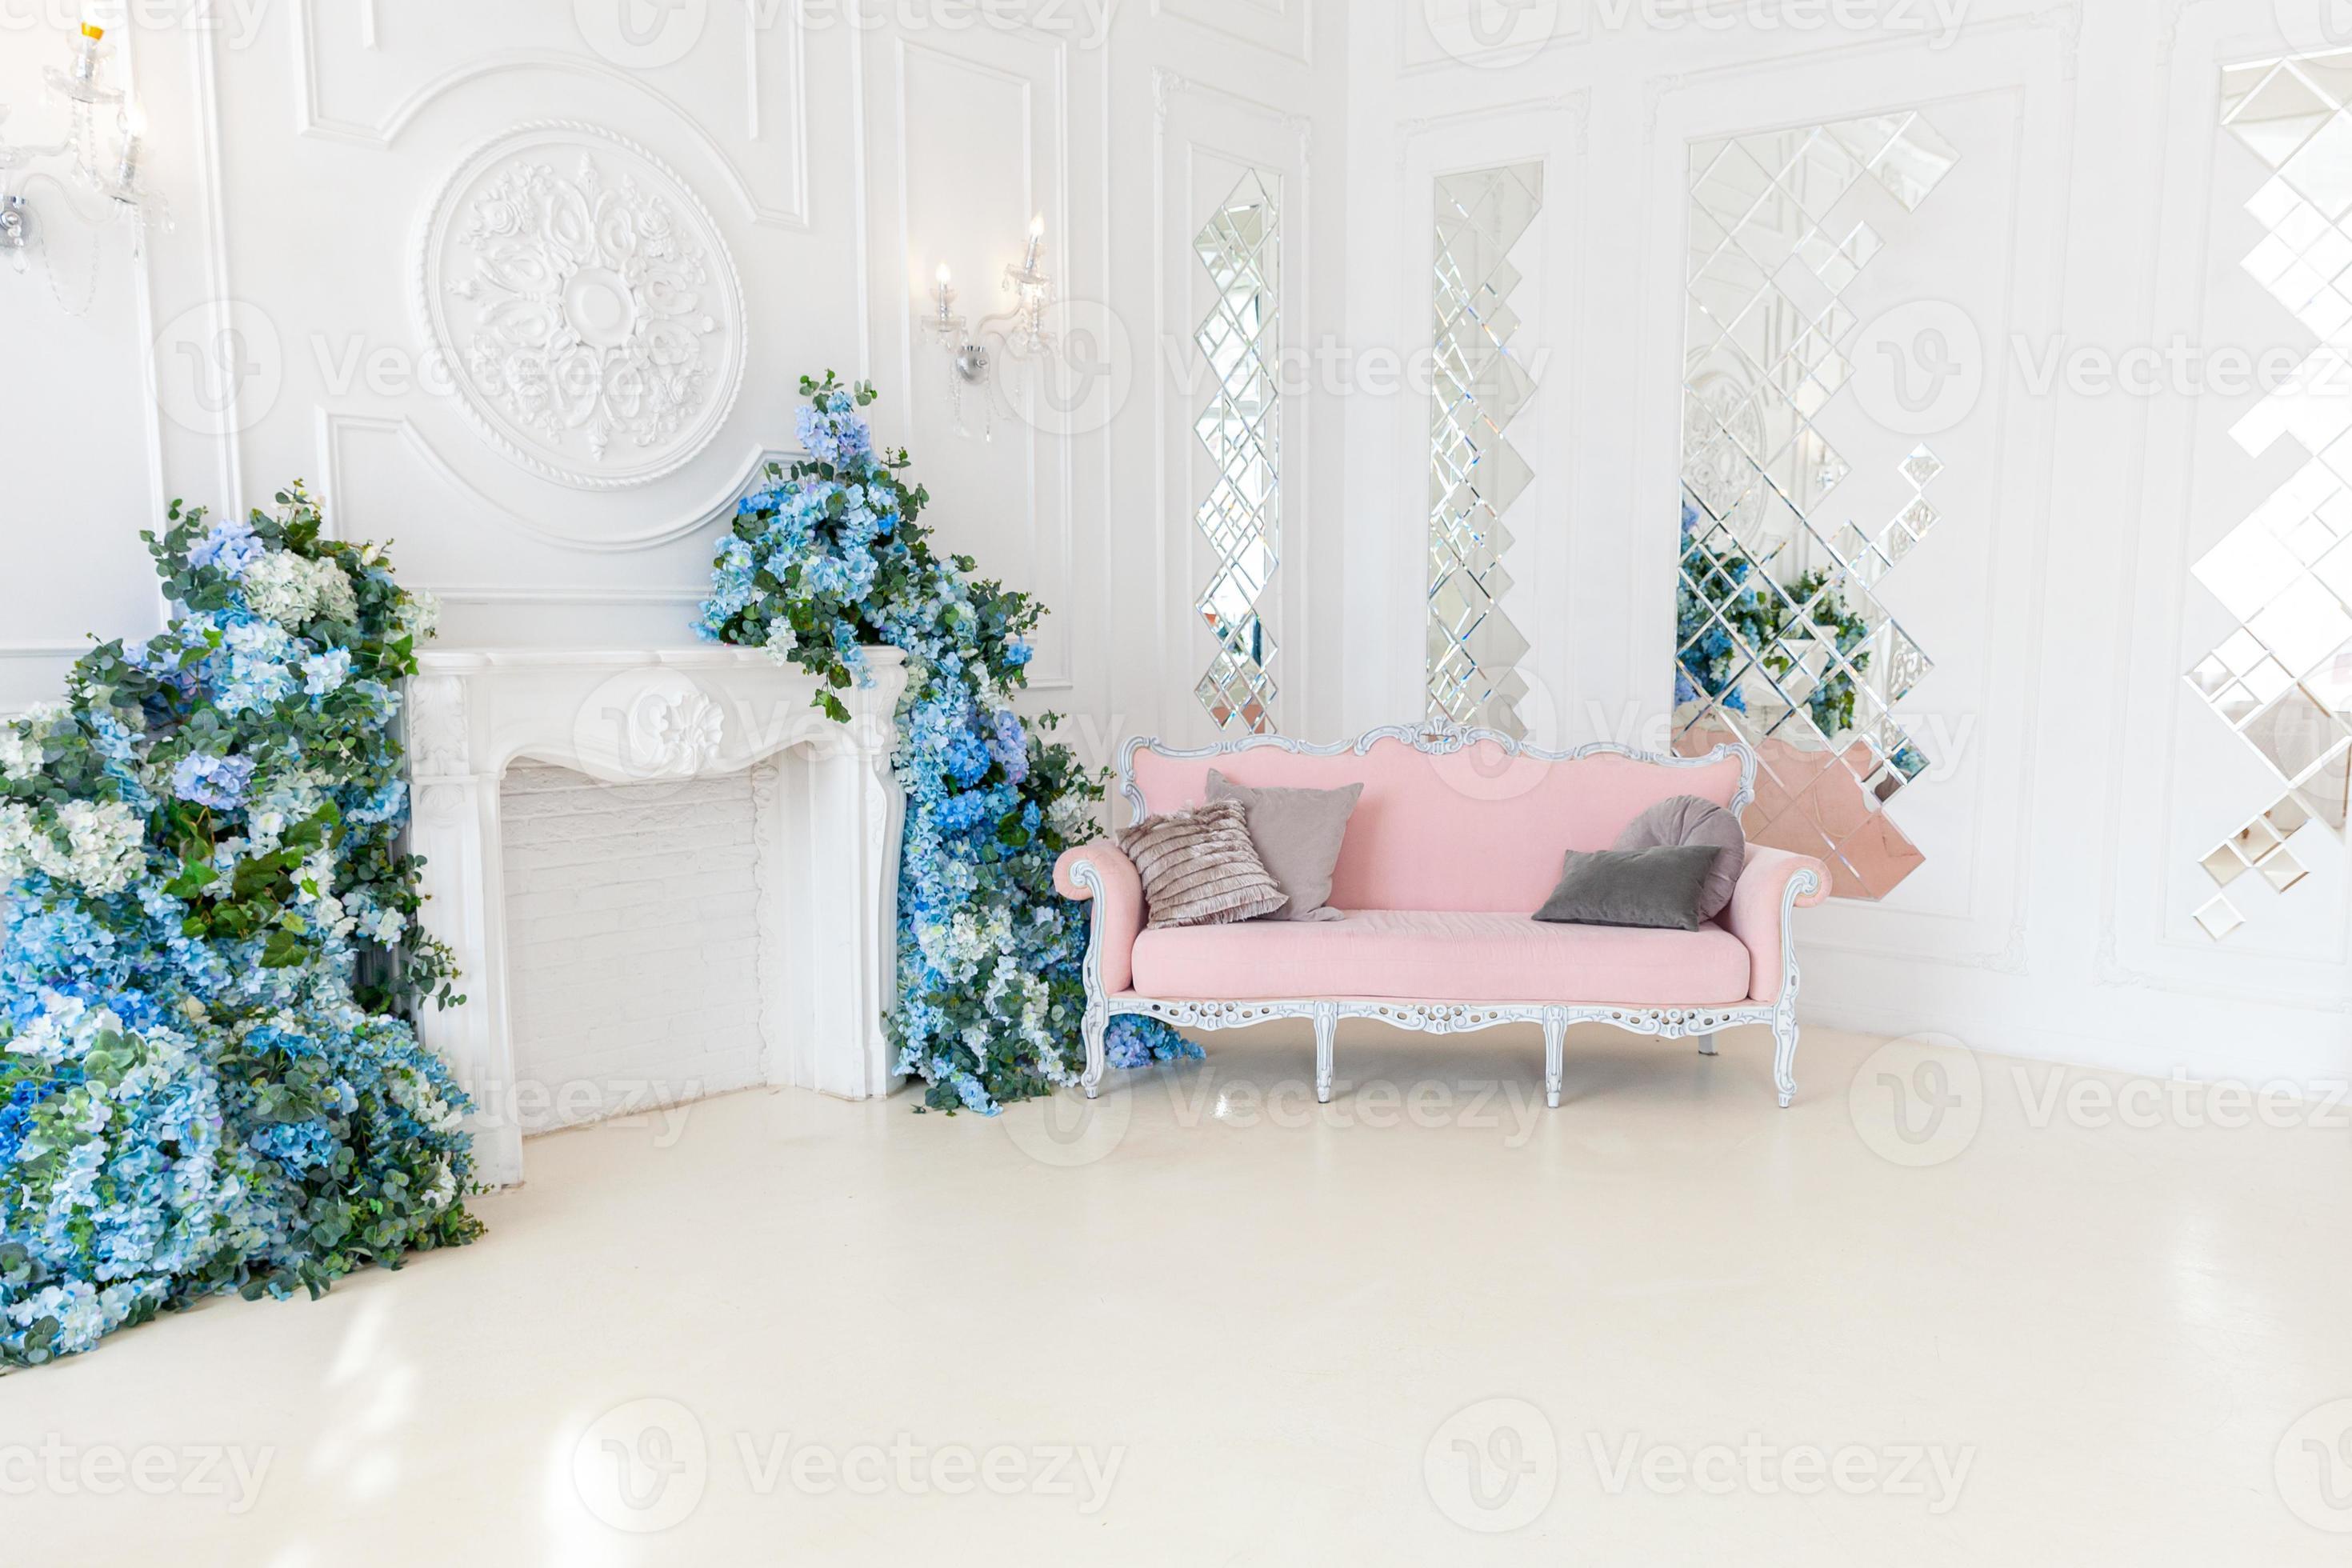 luxury white living room furniture